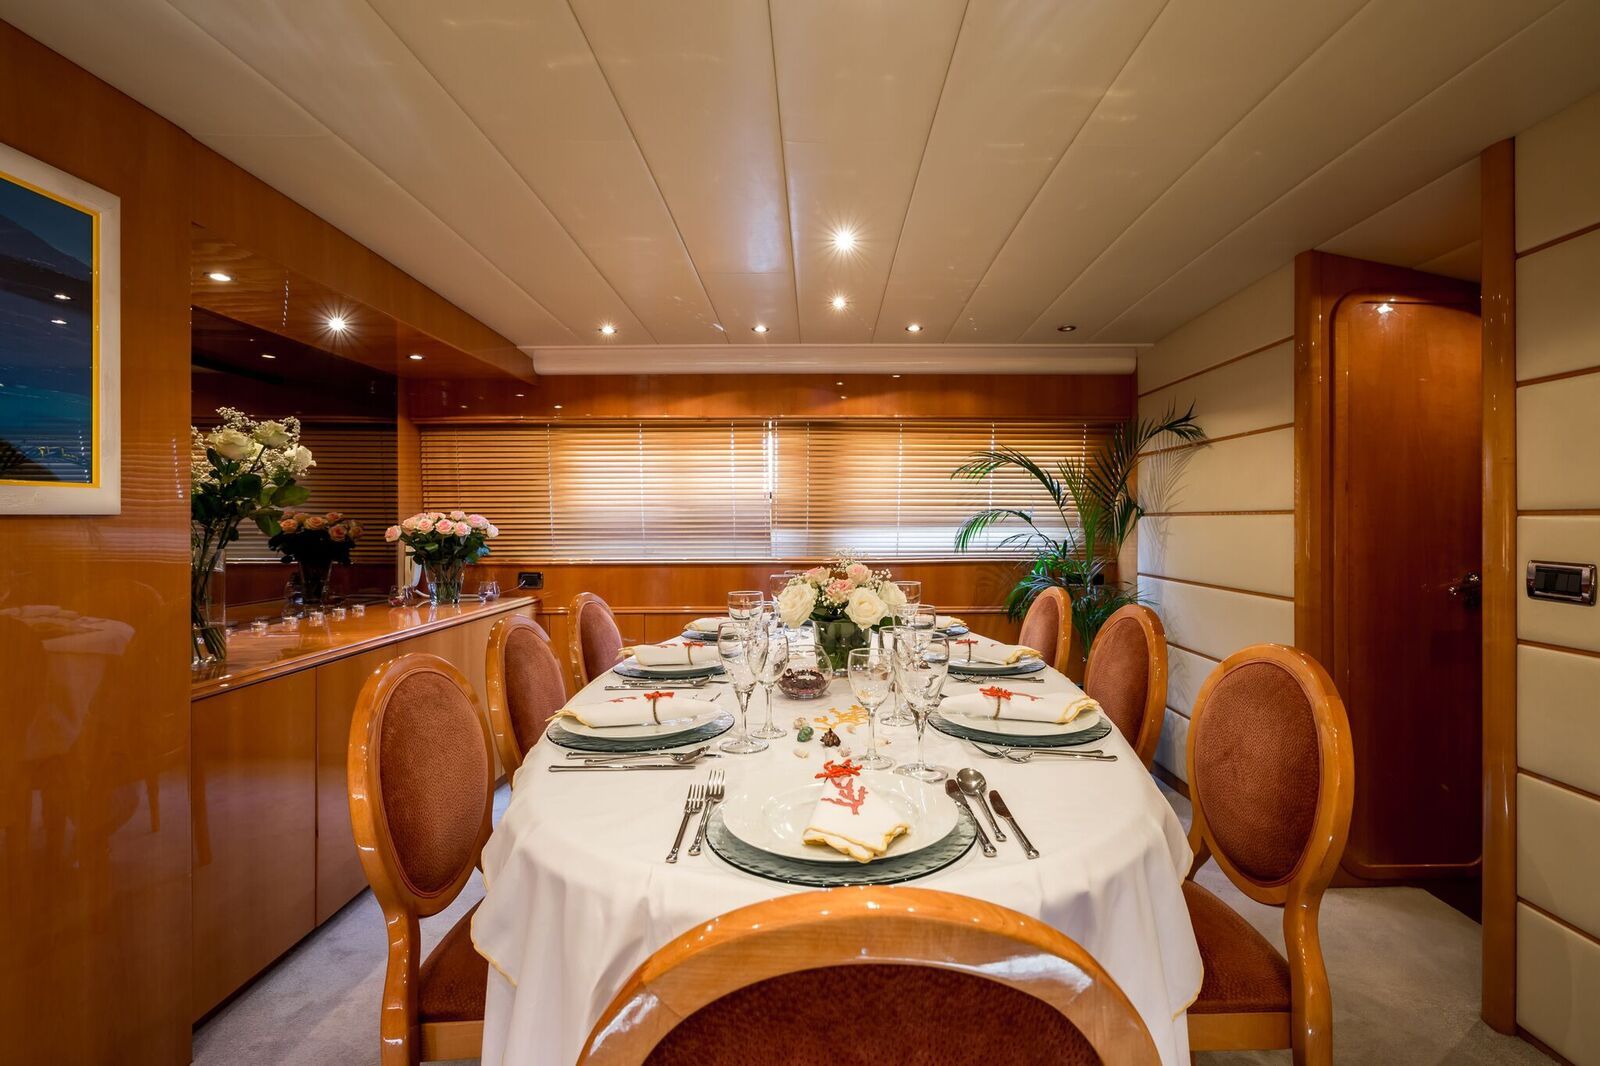 INDULGENCE OF POOLE Mangusta 86 Luxury Superyacht Dining Room